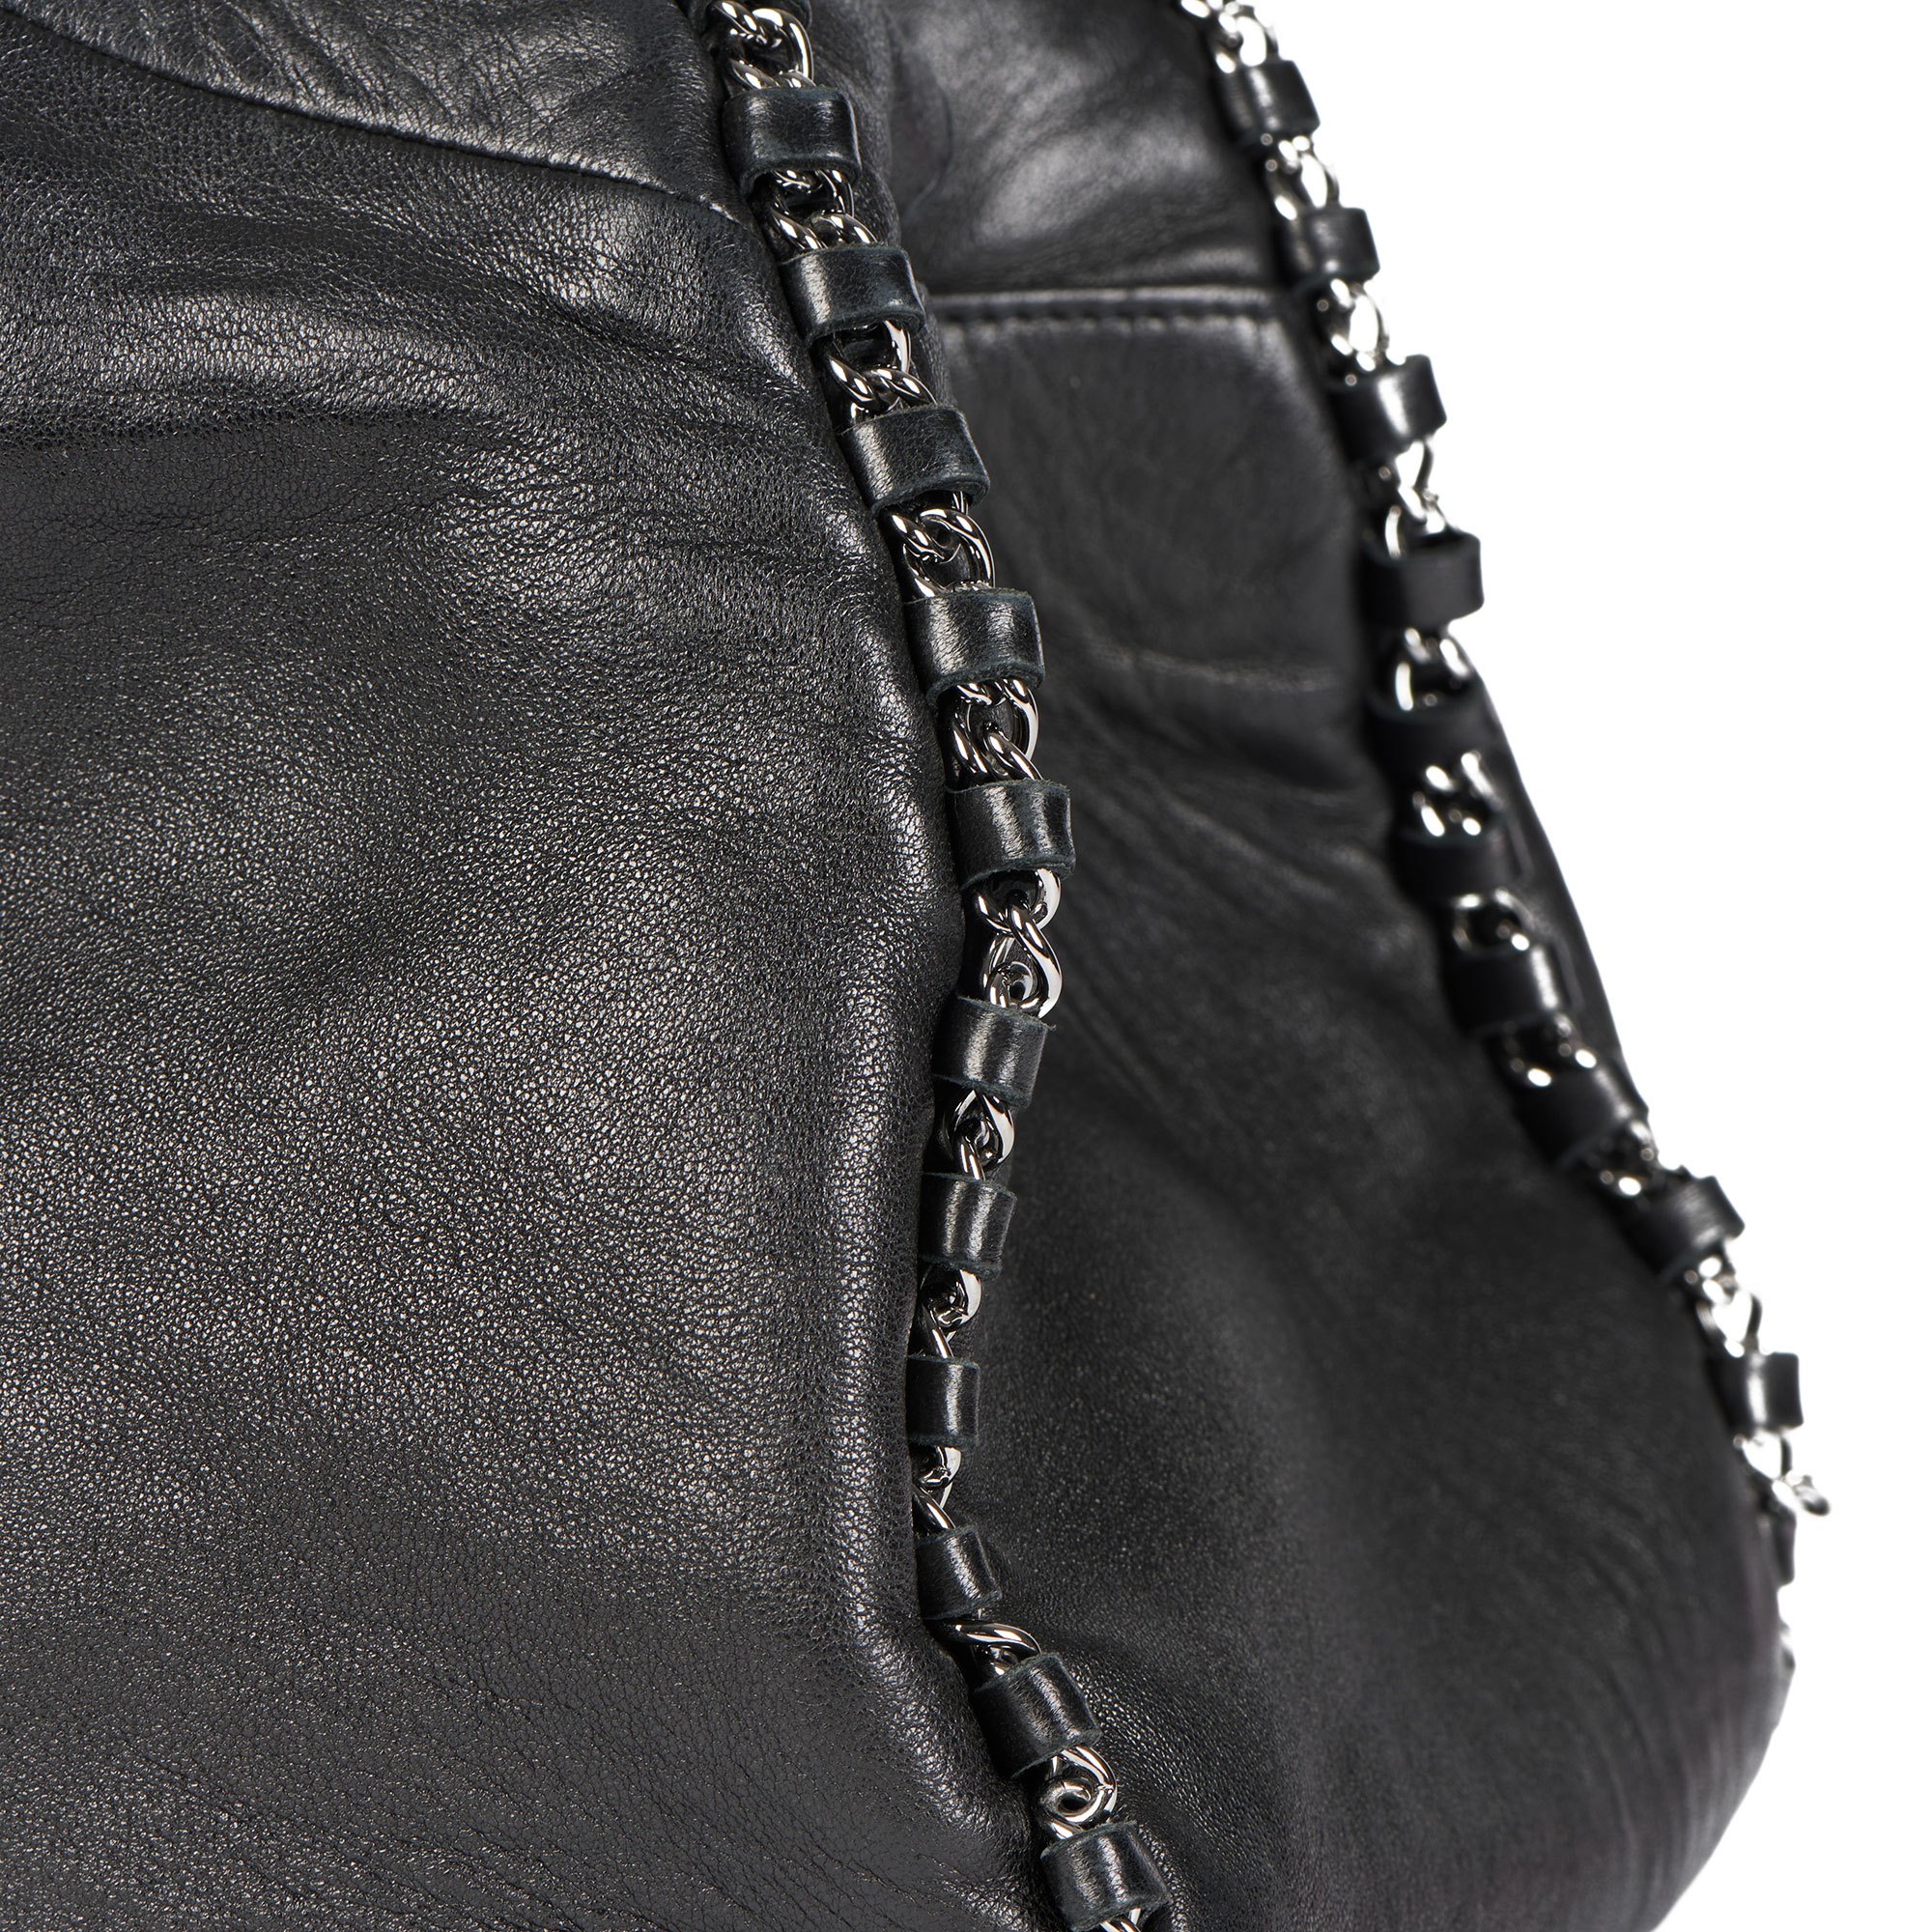 Chanel Black Goatskin Chain Around Hobo Bag